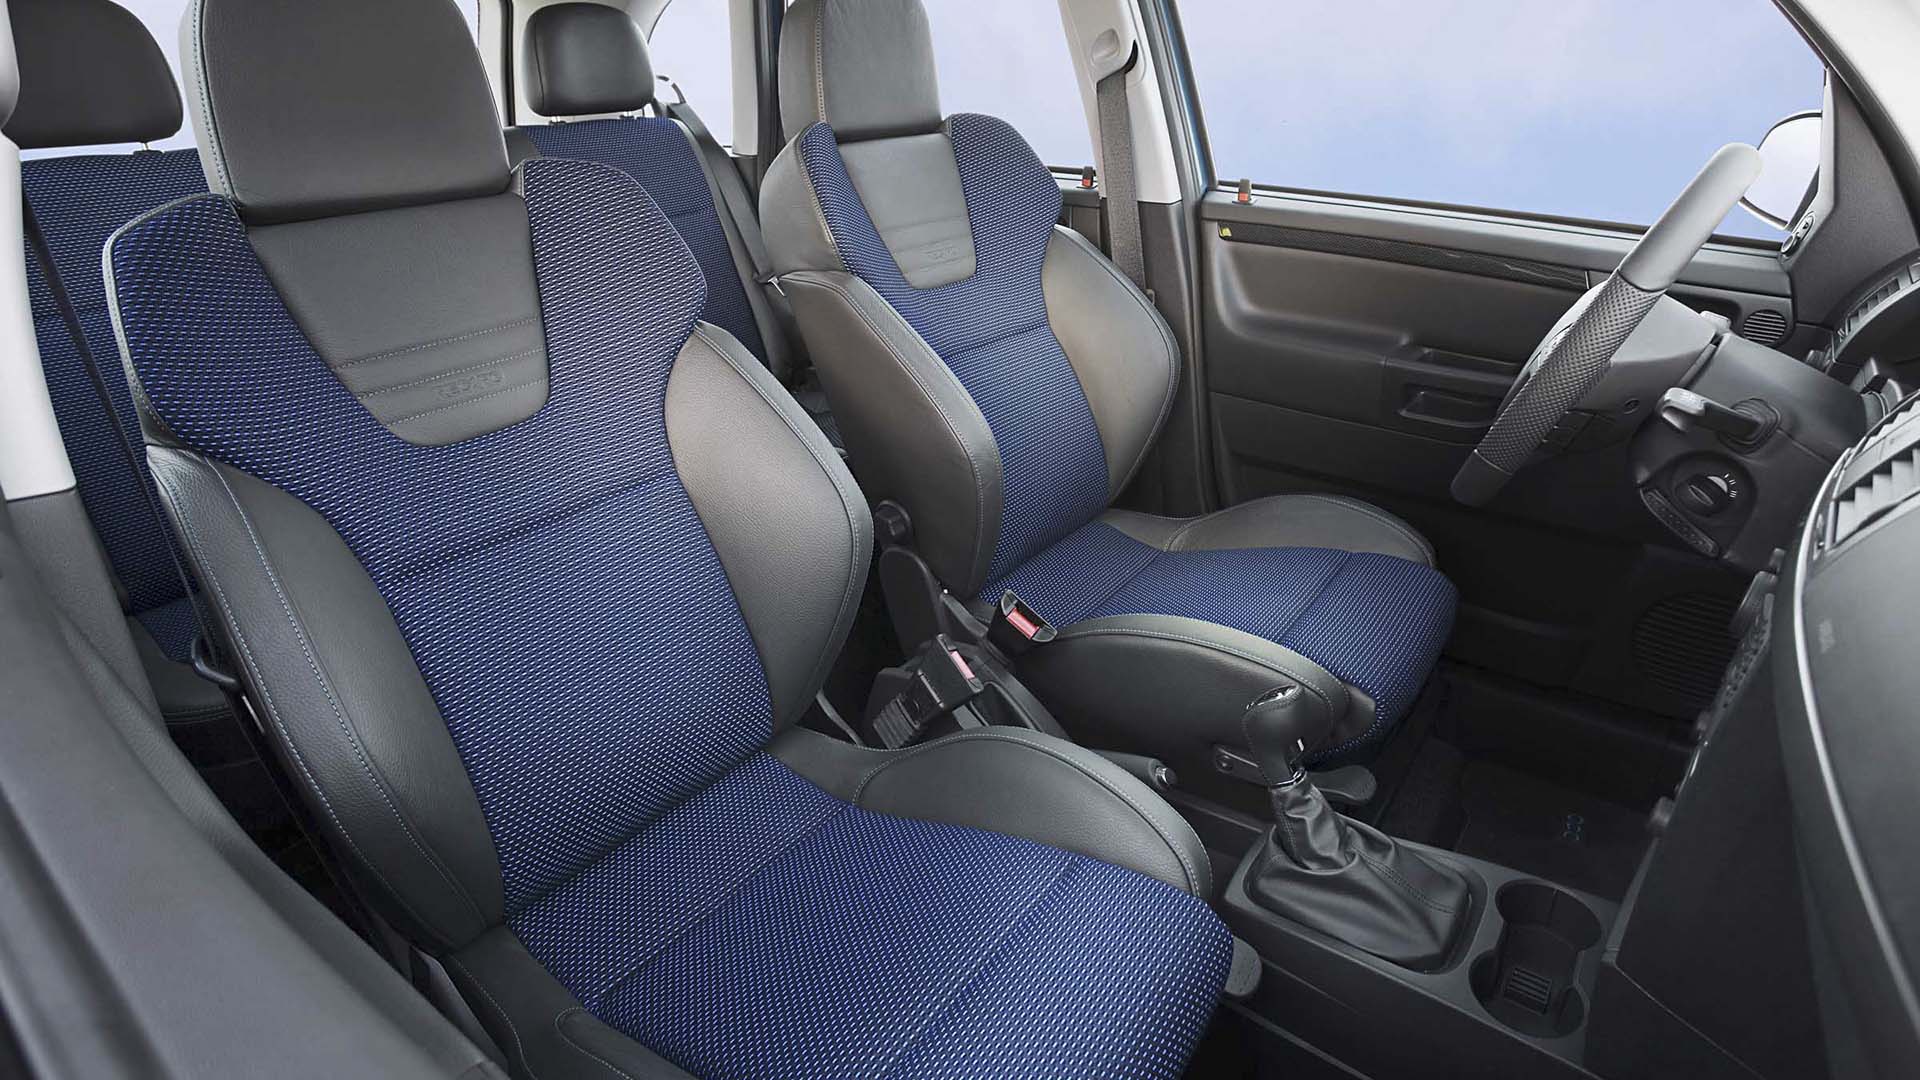 Vauxhall Meriva VXR Recaro seats